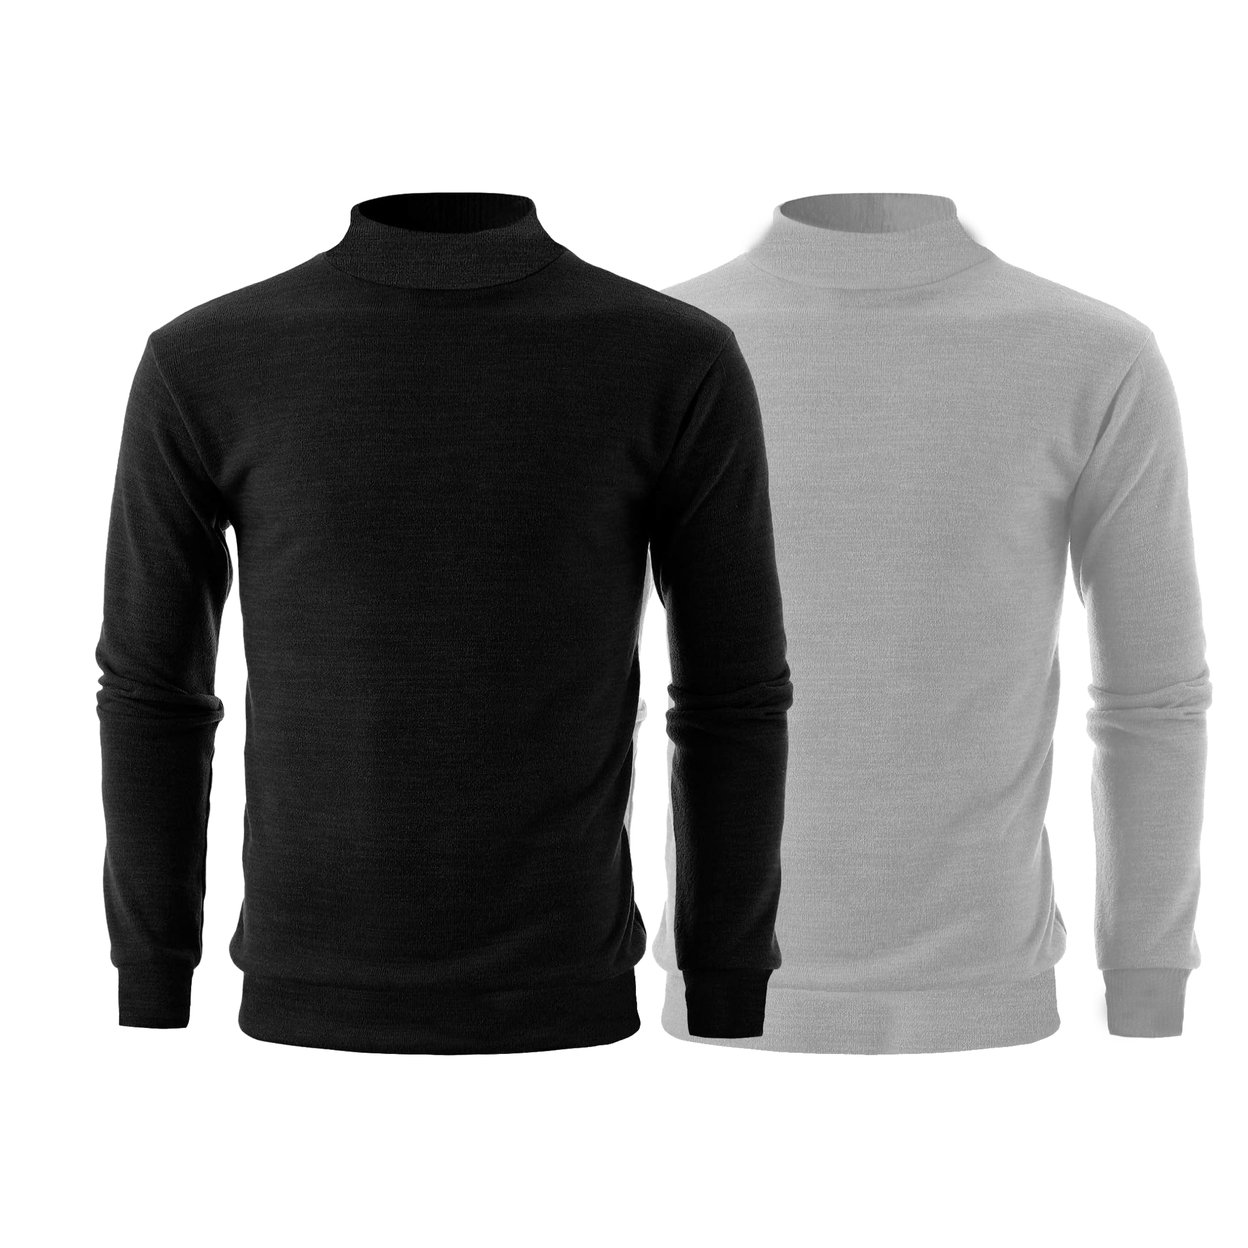 2-Pack: Men's Winter Warm Cozy Knit Slim Fit Mock Neck Sweater - Black & White, X-large